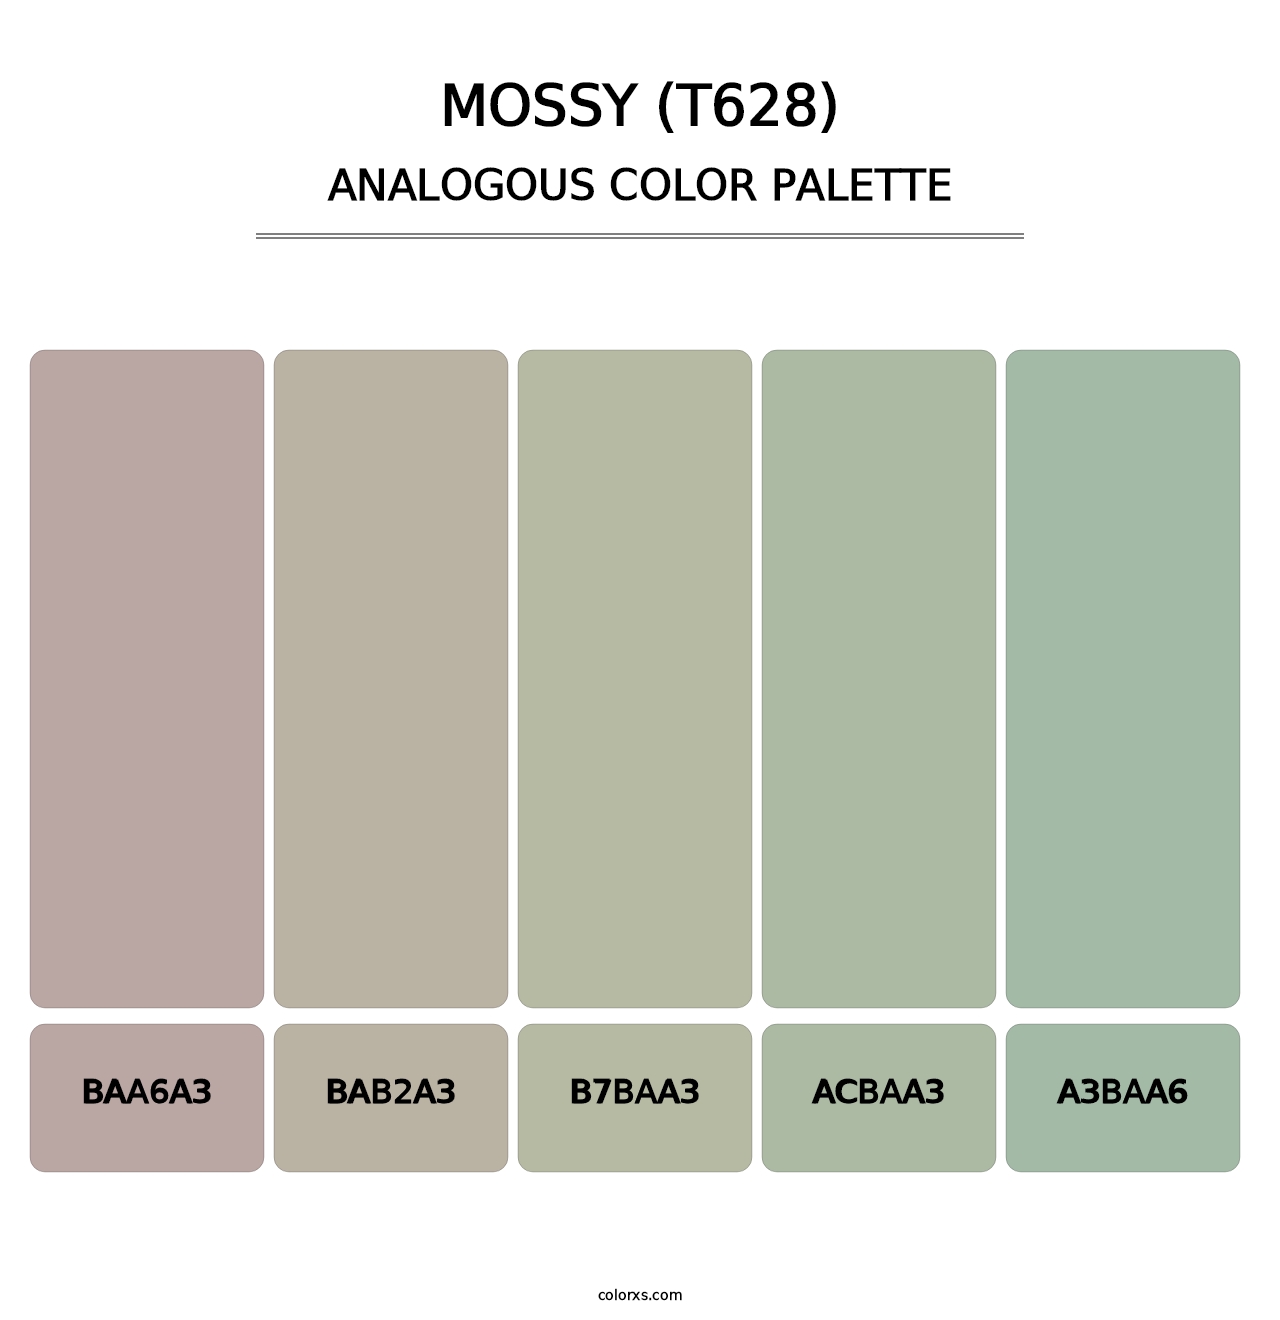 Mossy (T628) - Analogous Color Palette